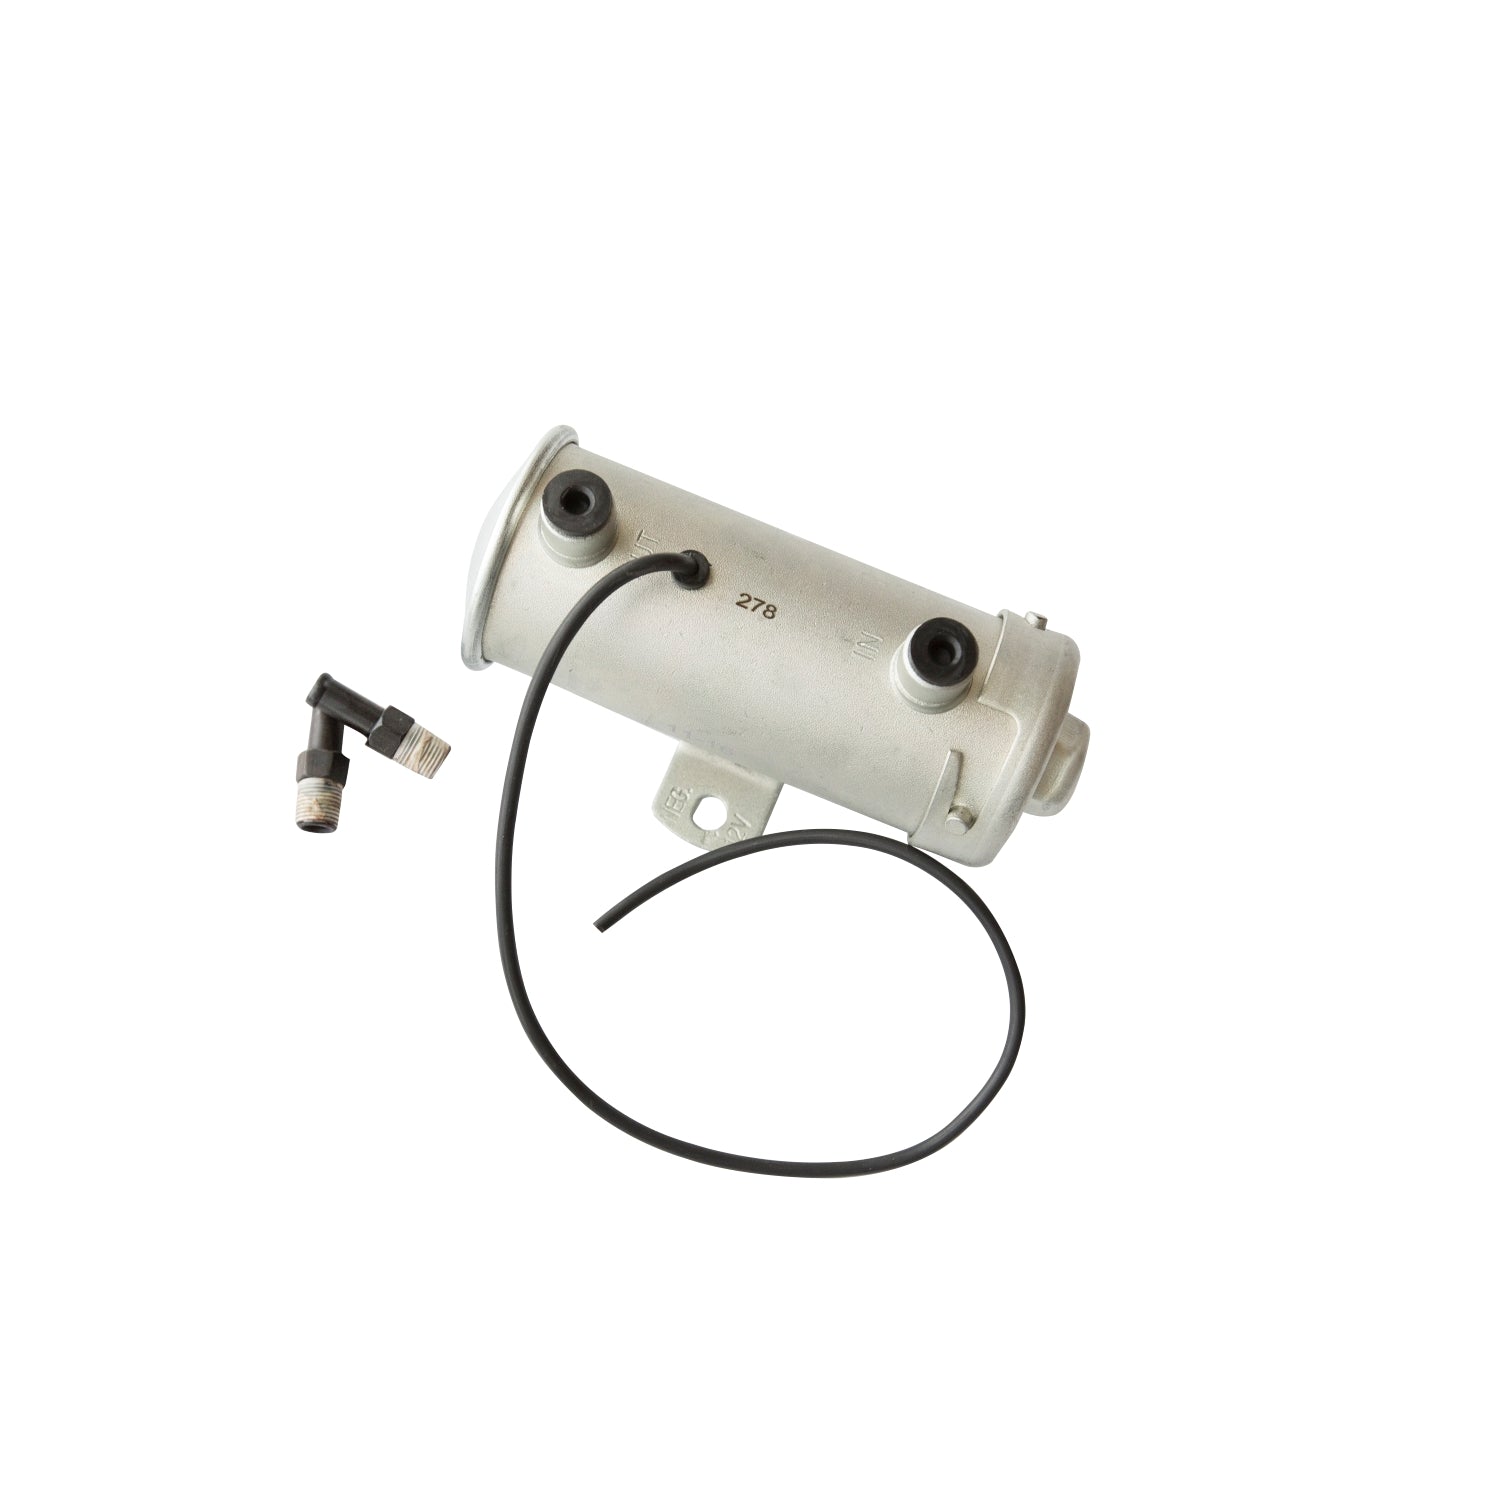 Electrical Fuel Pump Replacement for JOHN DEERE M100 M160 AR67543 AZ27951 82006984